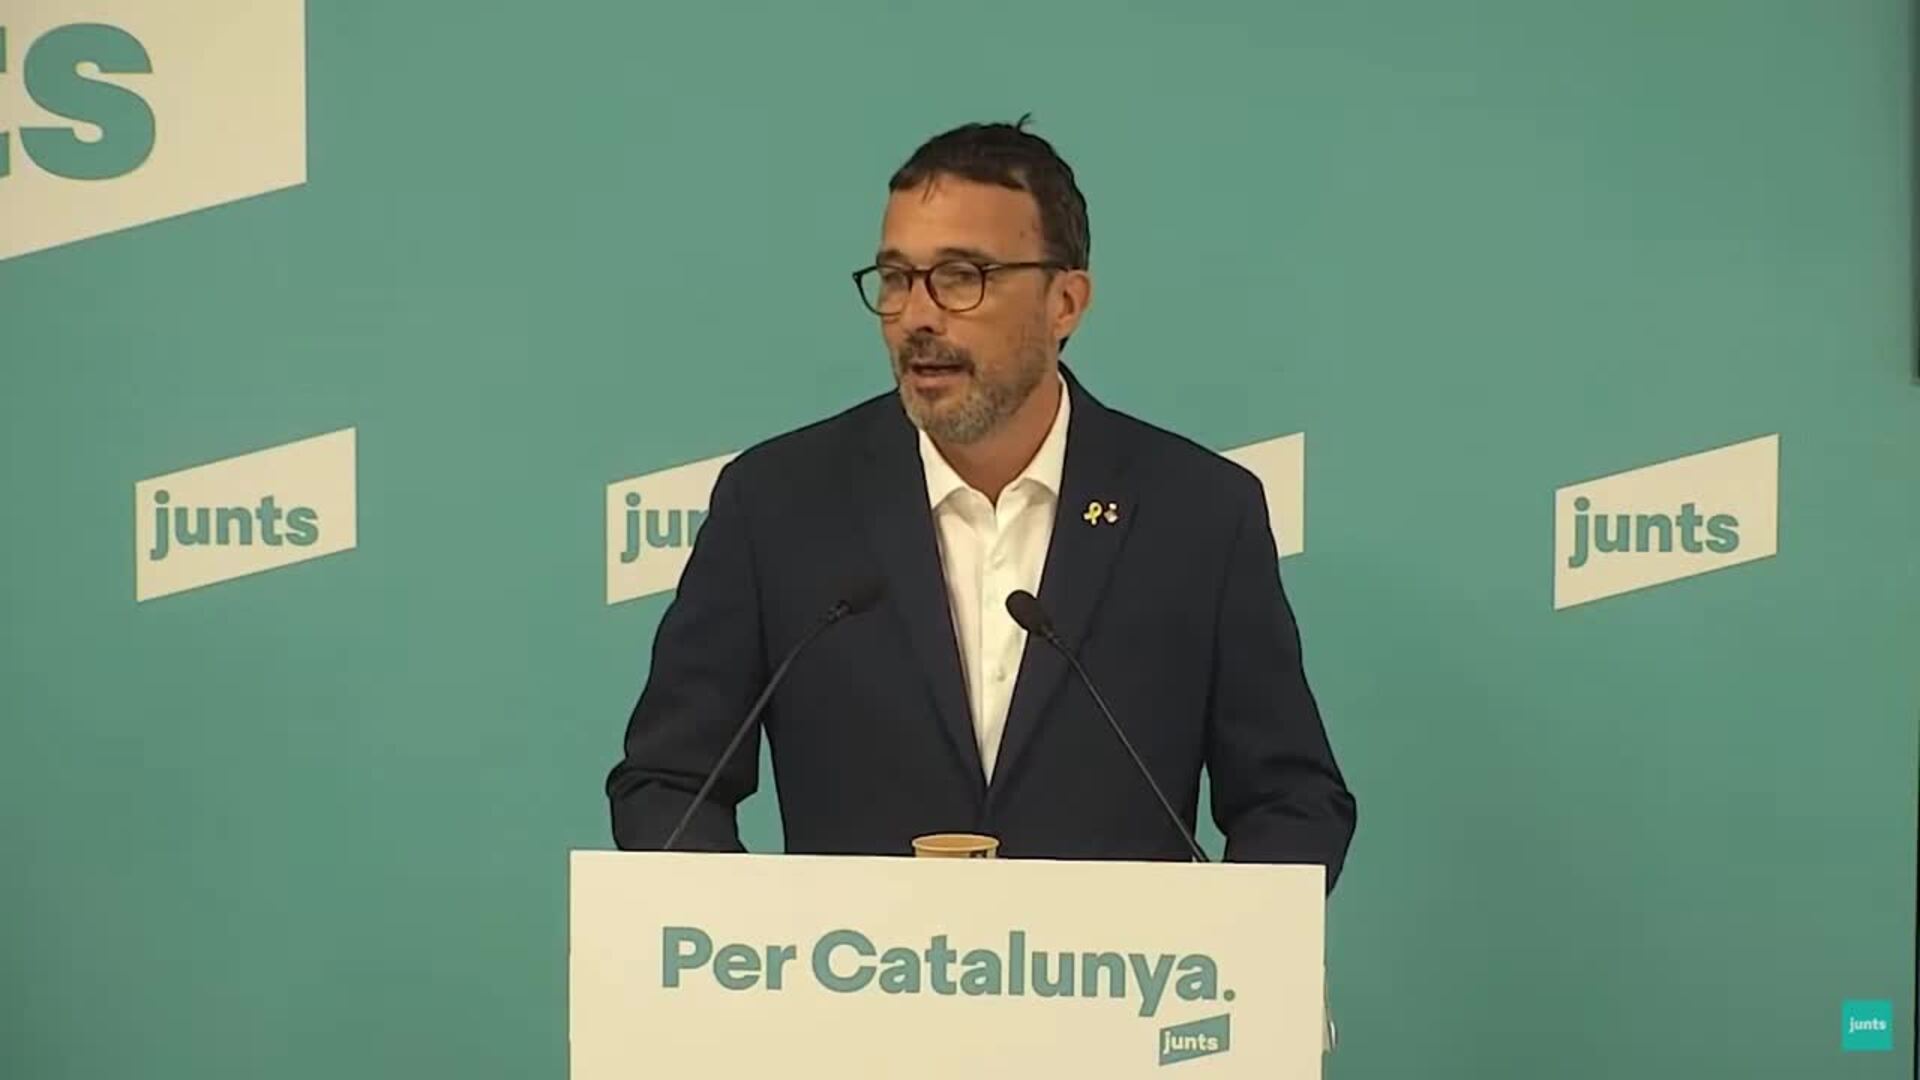 Junts asegura que no les consta "ningún contacto oficial" de dirigentes del PSOE o Sumar